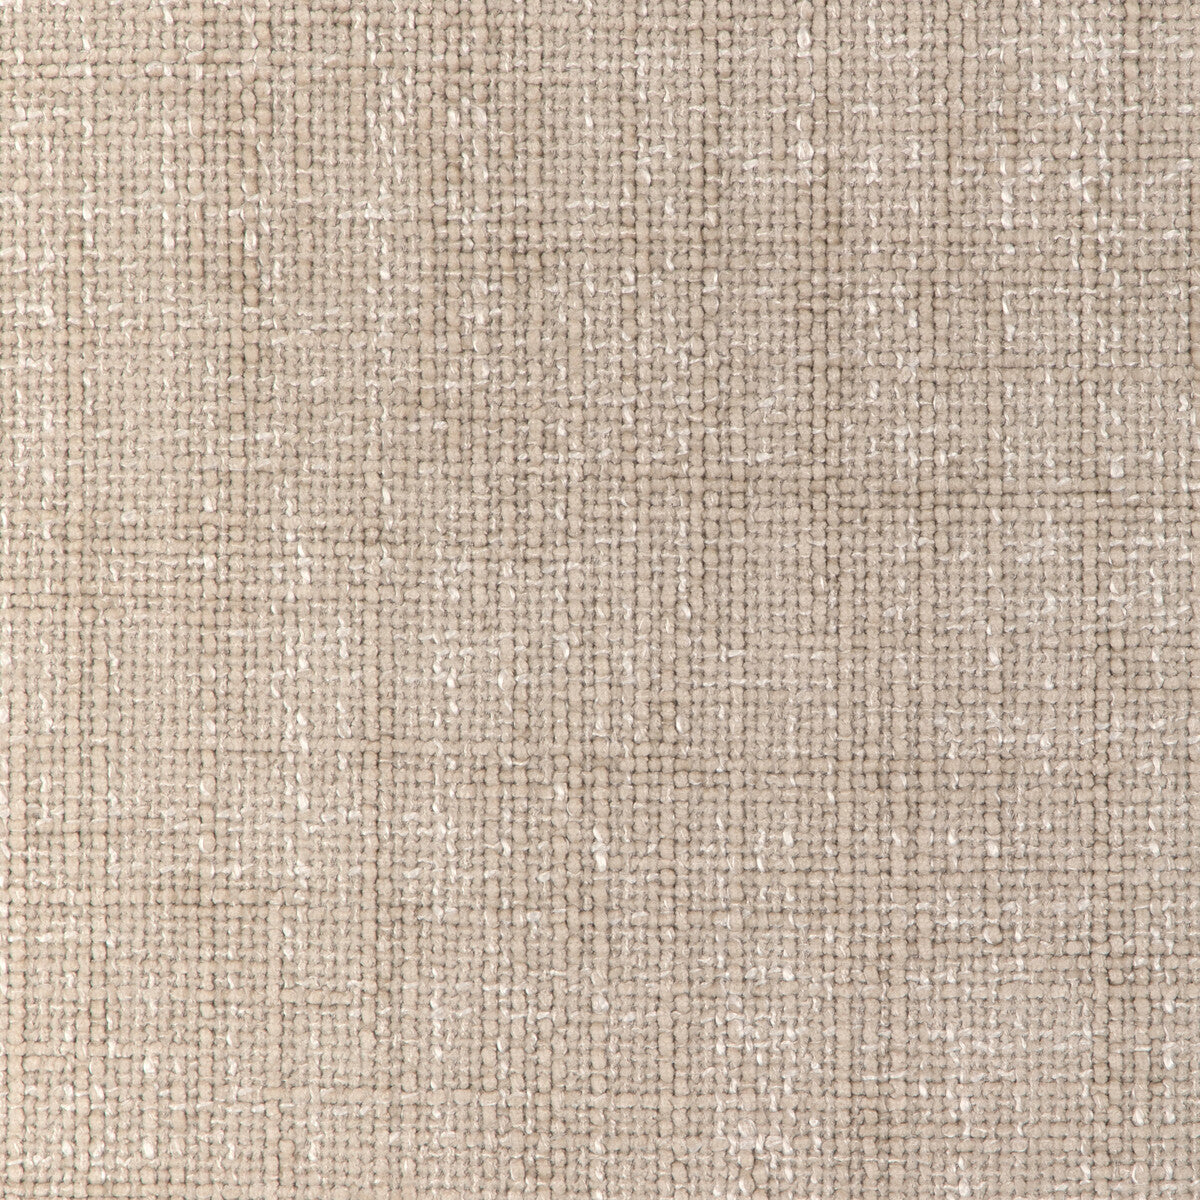 Kravet Smart fabric in 36677-1116 color - pattern 36677.1116.0 - by Kravet Smart in the Performance Kravetarmor collection